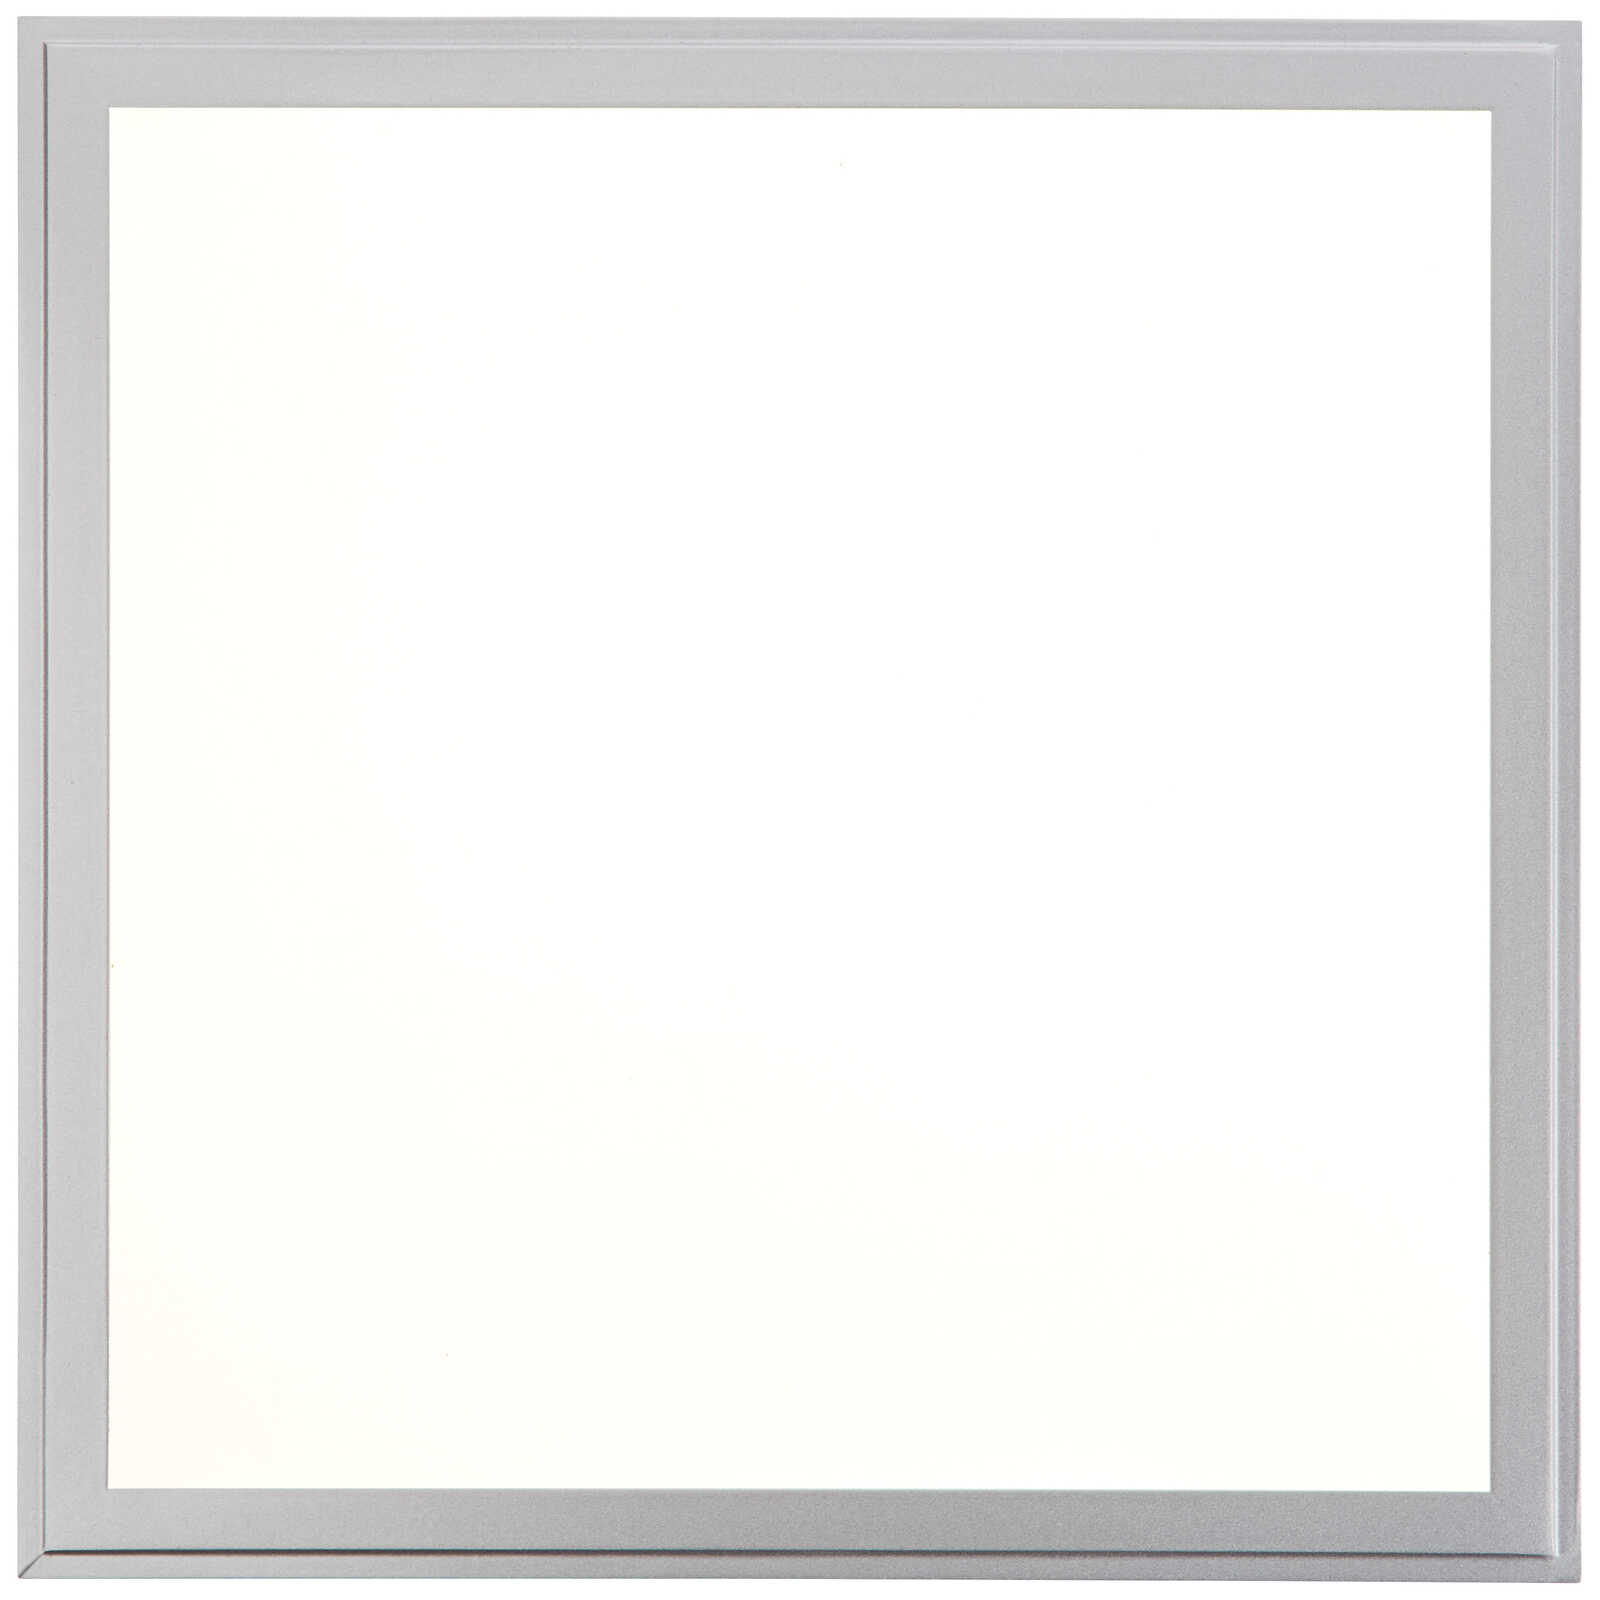             Metal ceiling light - Alba 1 - silver, white
        